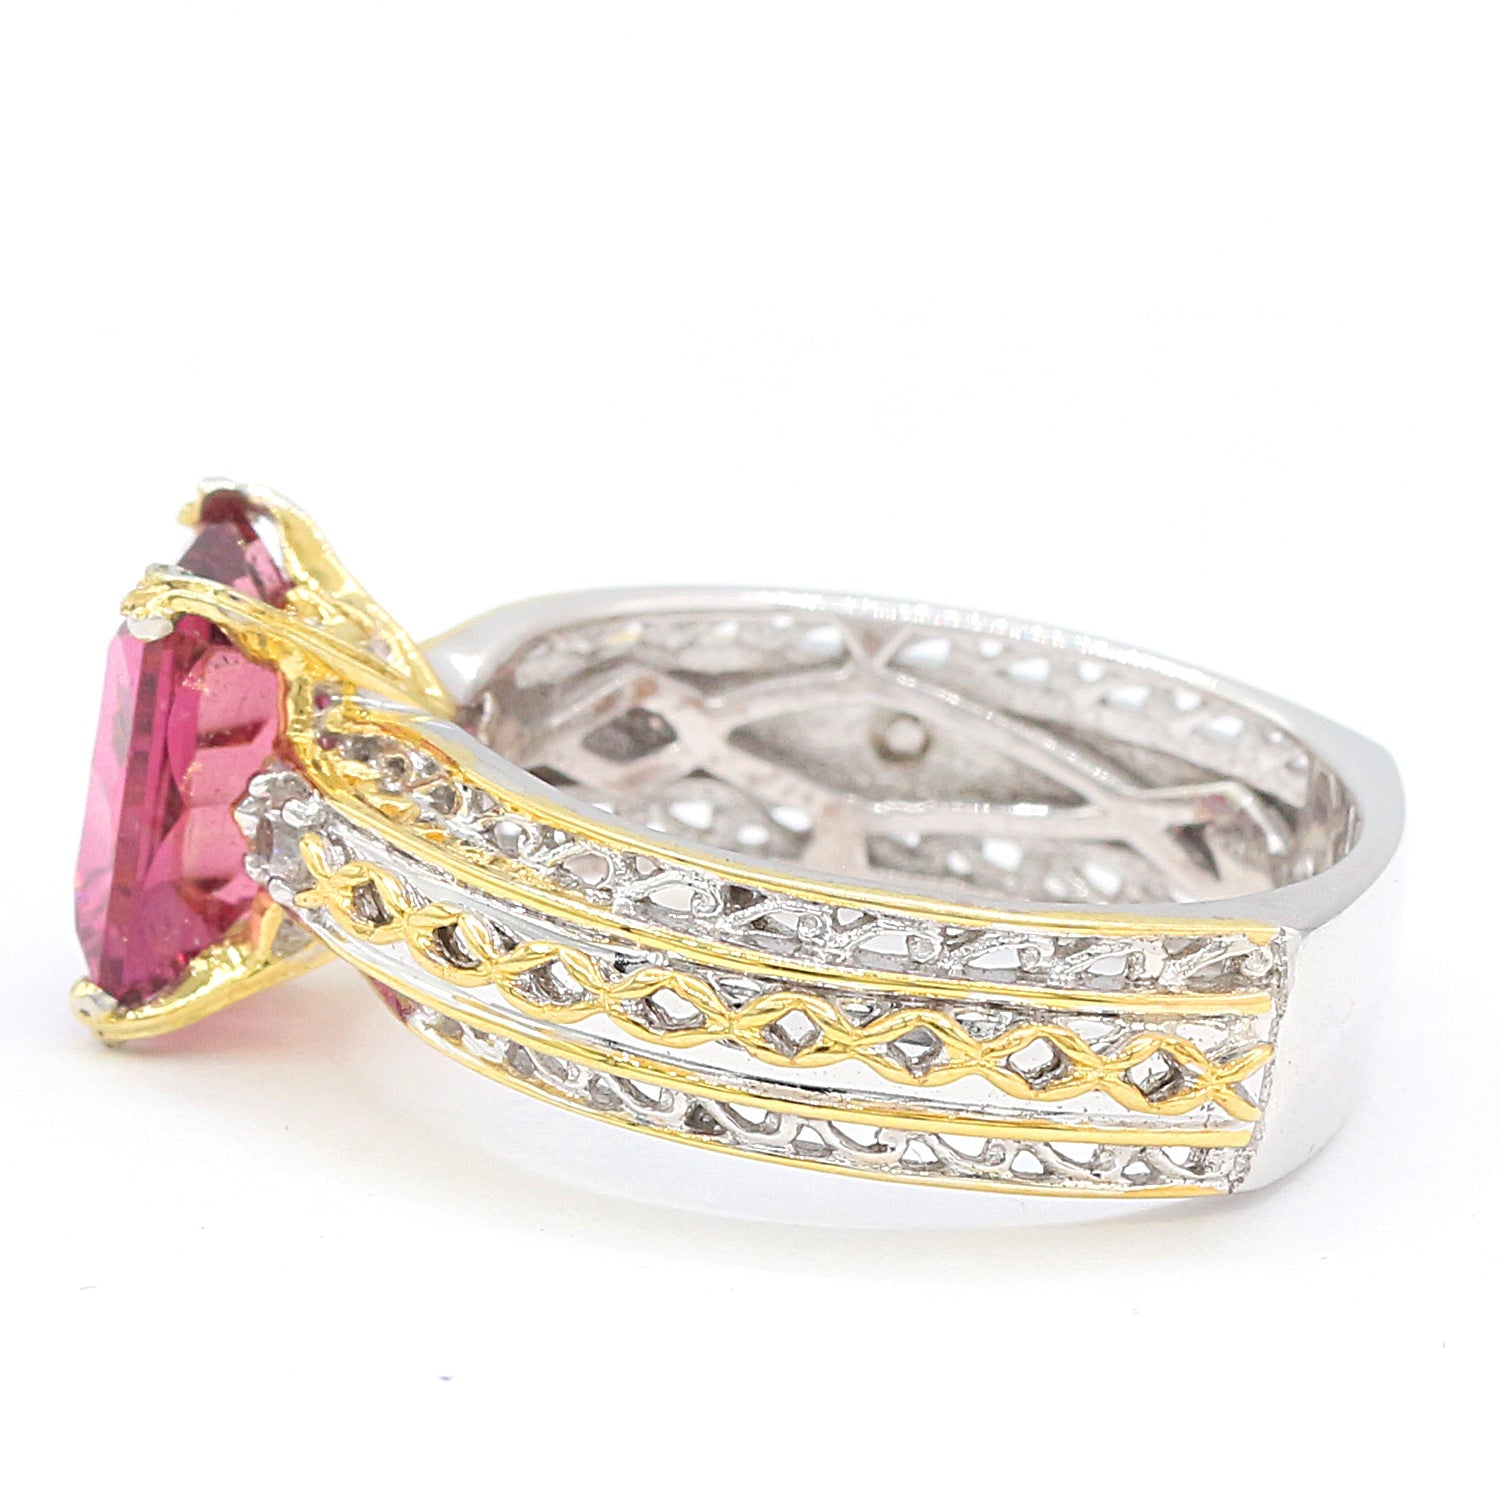 BACK IN STOCK Gems en Vogue 2.62ctw Pink Tourmaline & White Zircon Ring